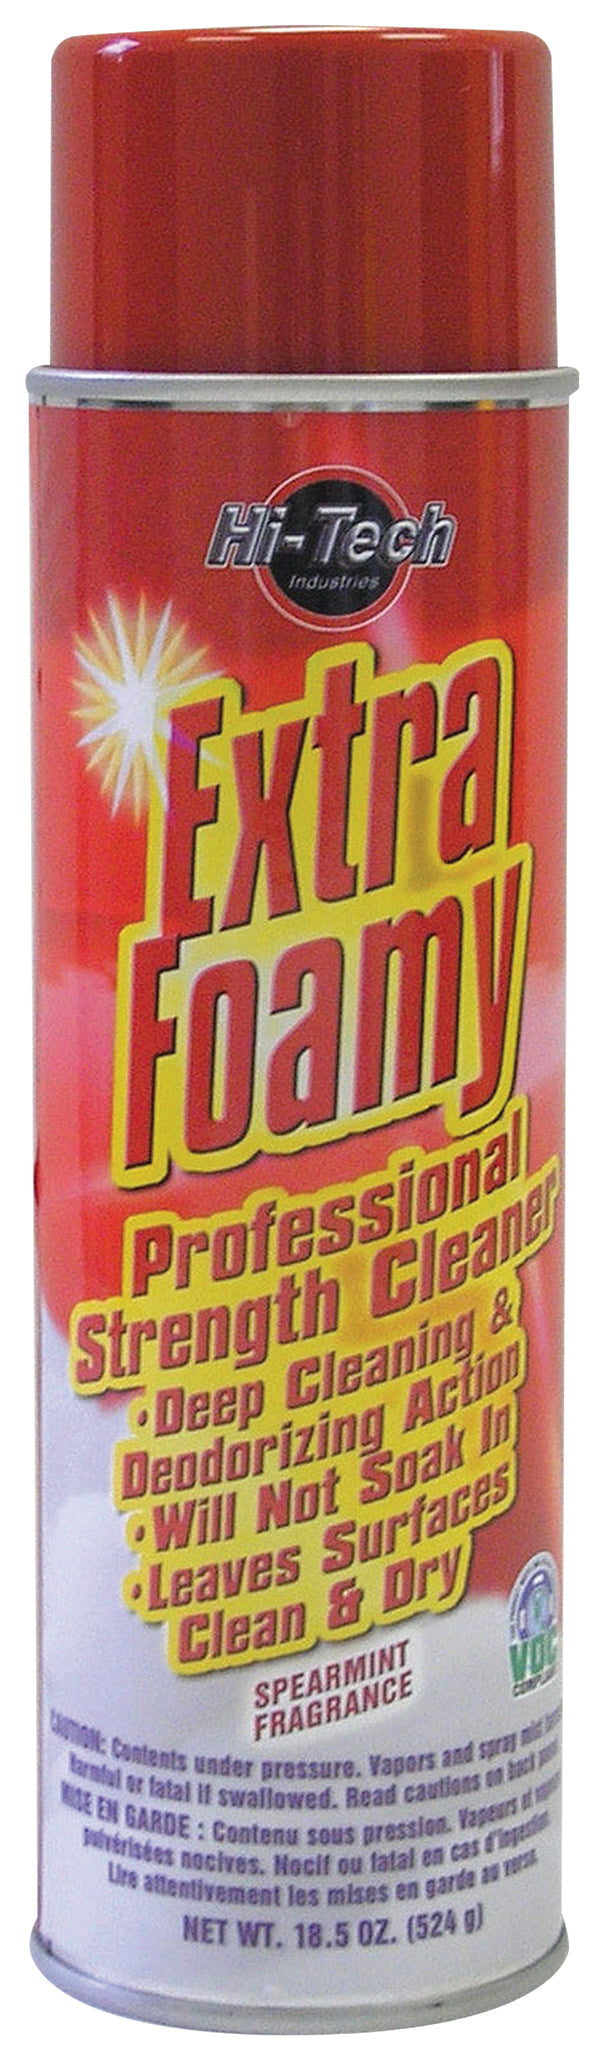 Extra Foamy Multi Purpose Cleaner